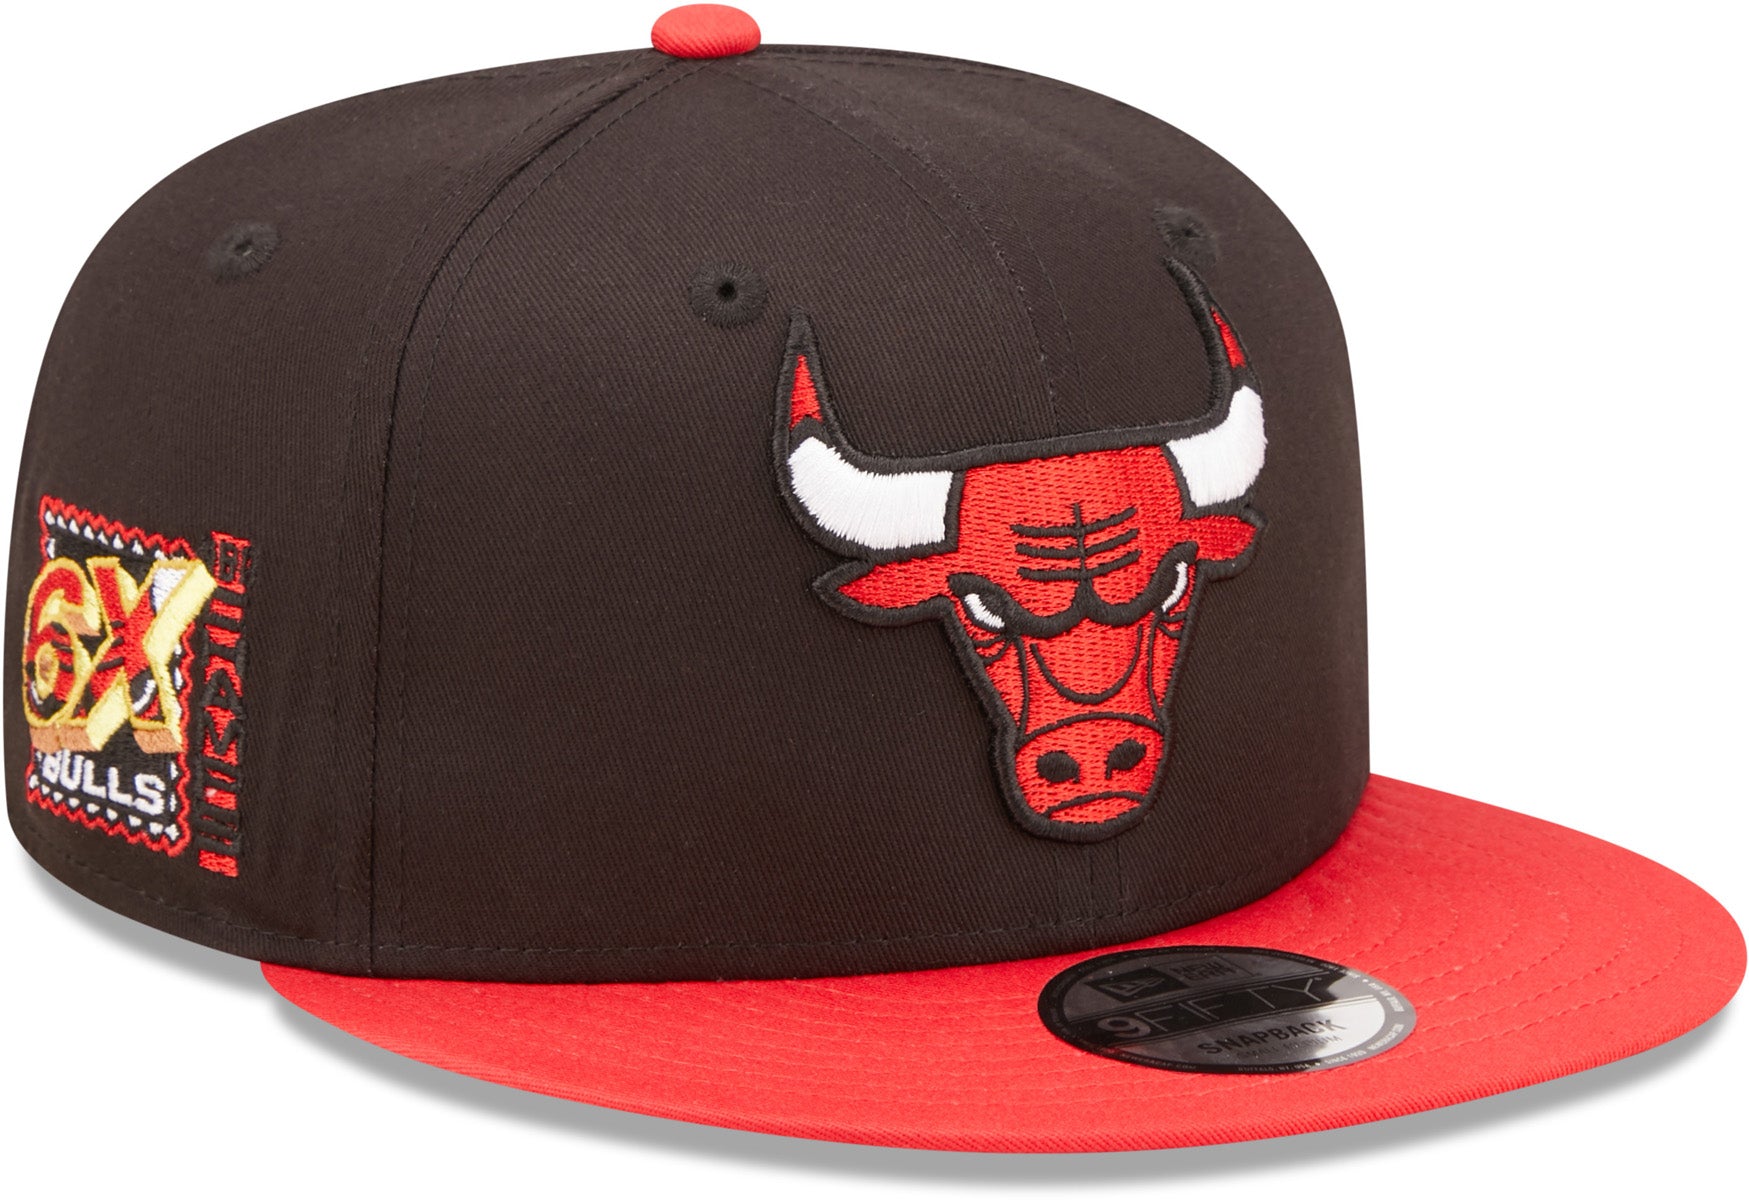 Chicago Bulls NBA Team Logo New Era snapback 9fifty red cap